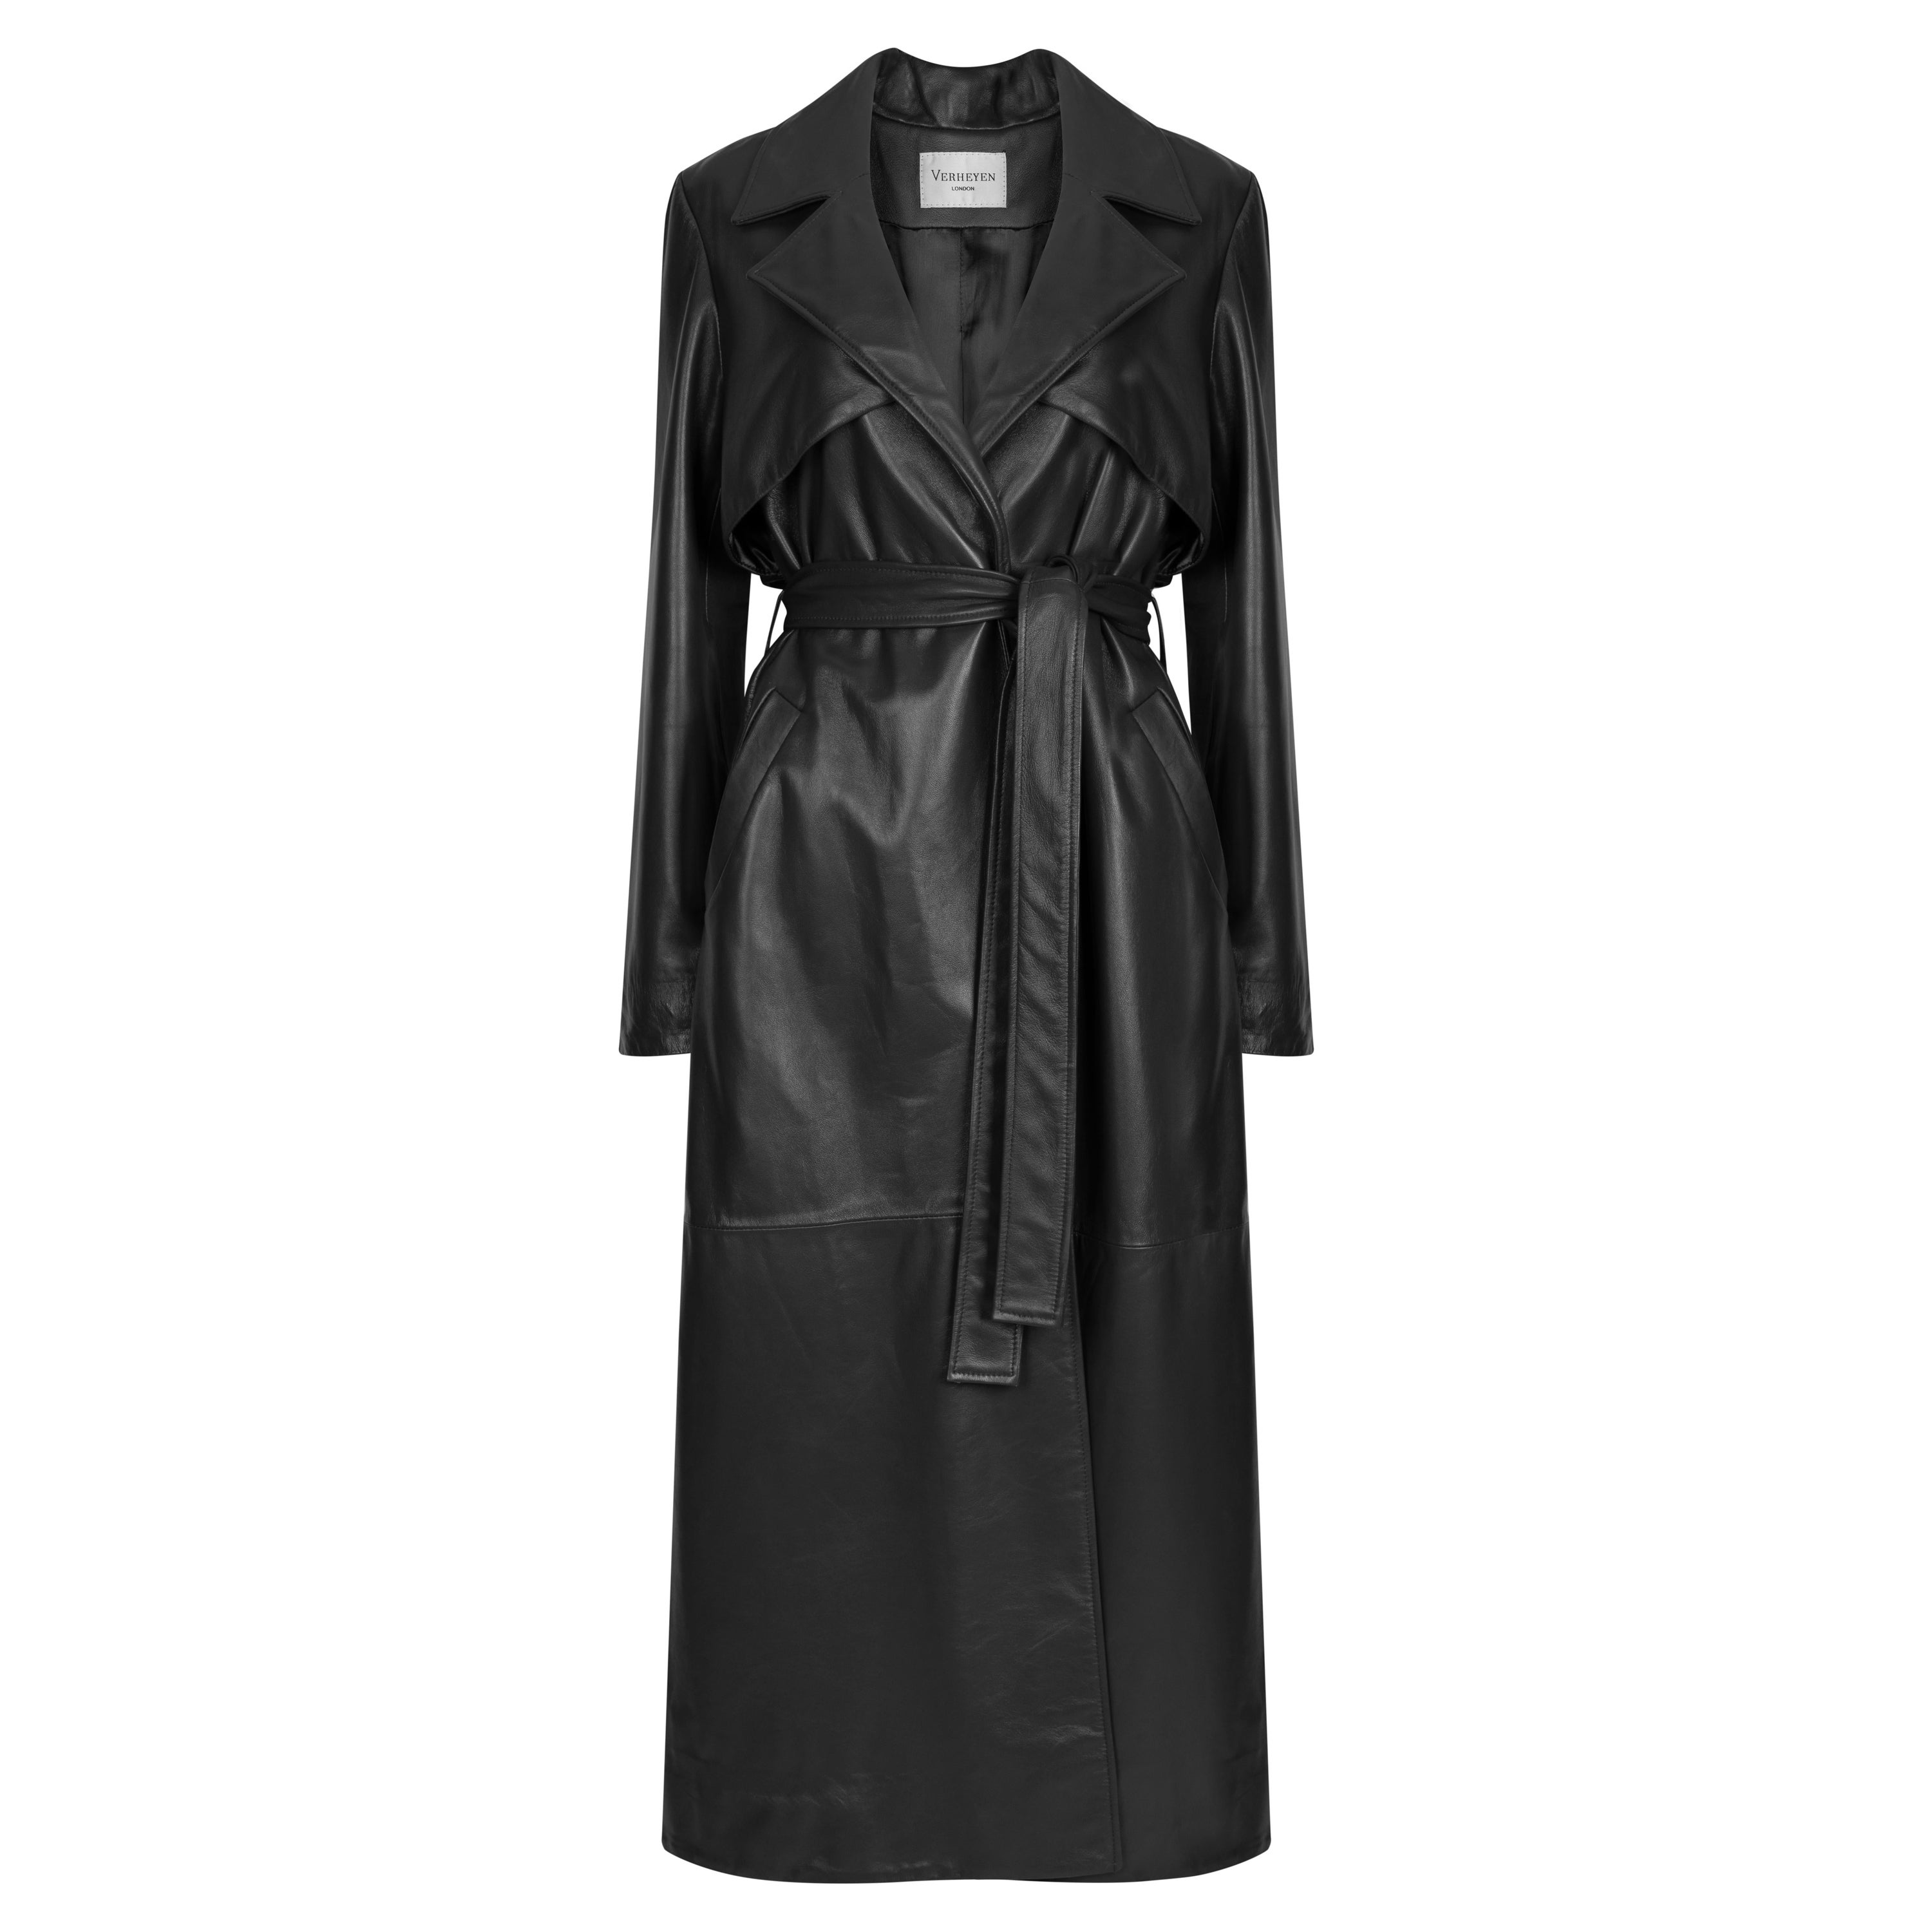 Verheyen London Leather Trench Coat in Black  - Size uk 8 For Sale